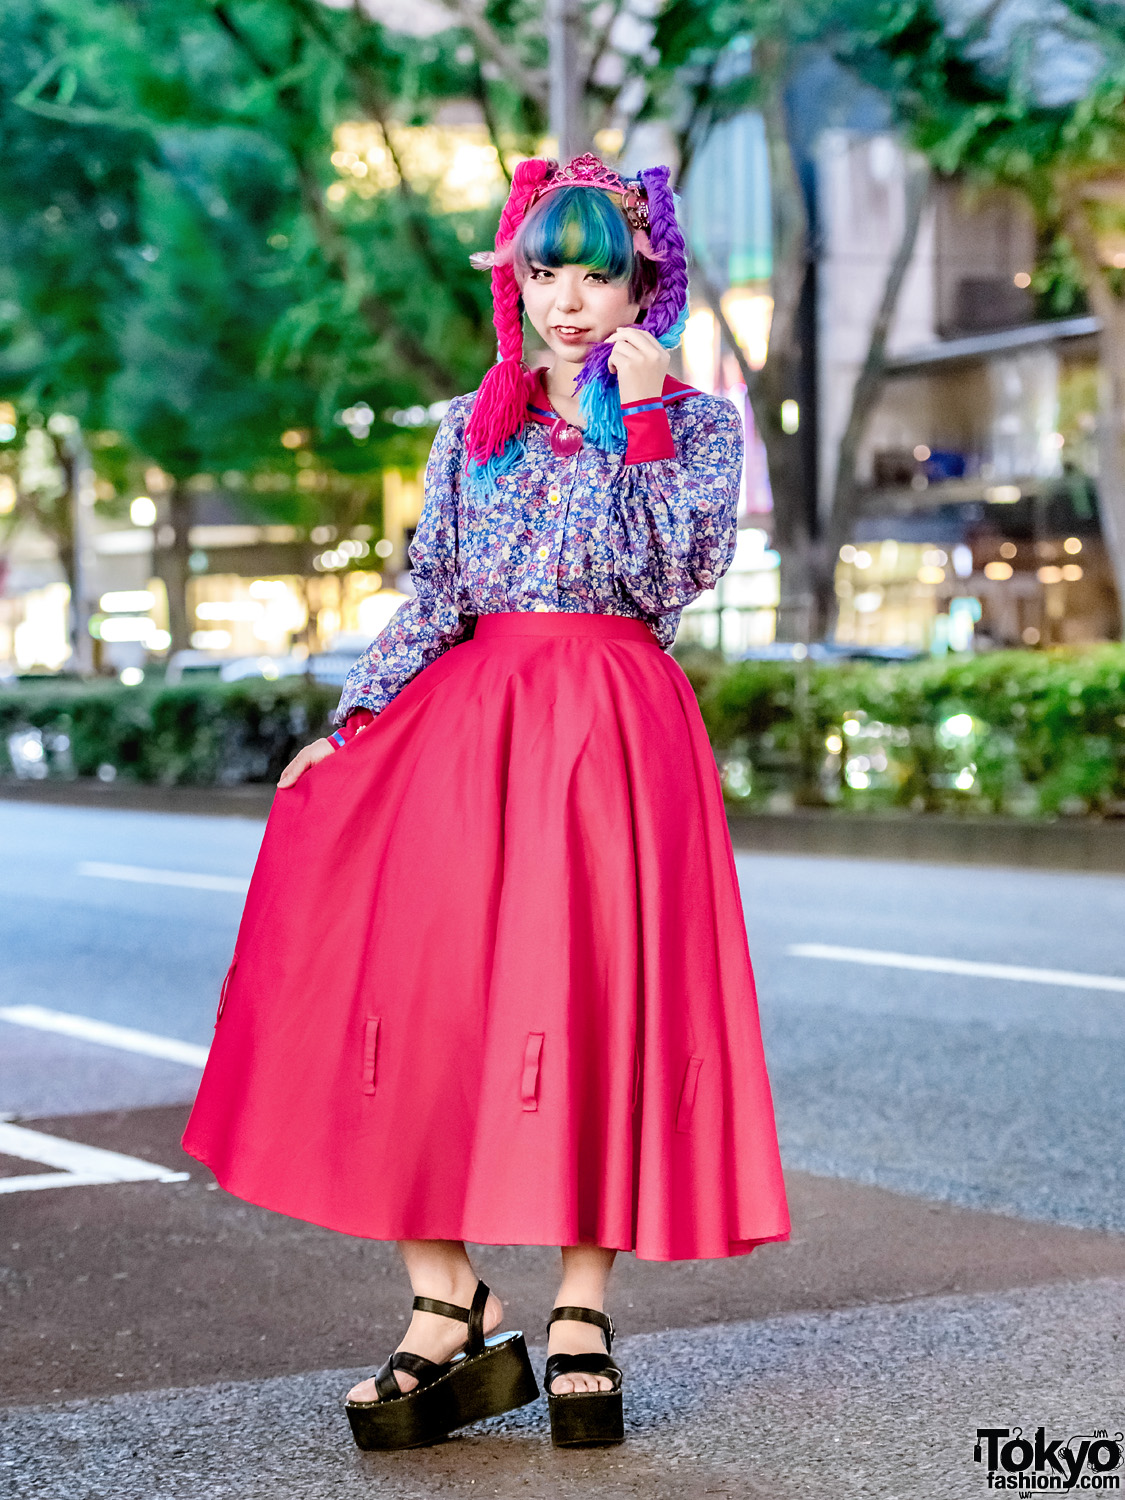 Harajuku Girl’s Doll-inspired DIY Street Style w/ Colorful Yarn Hair ...